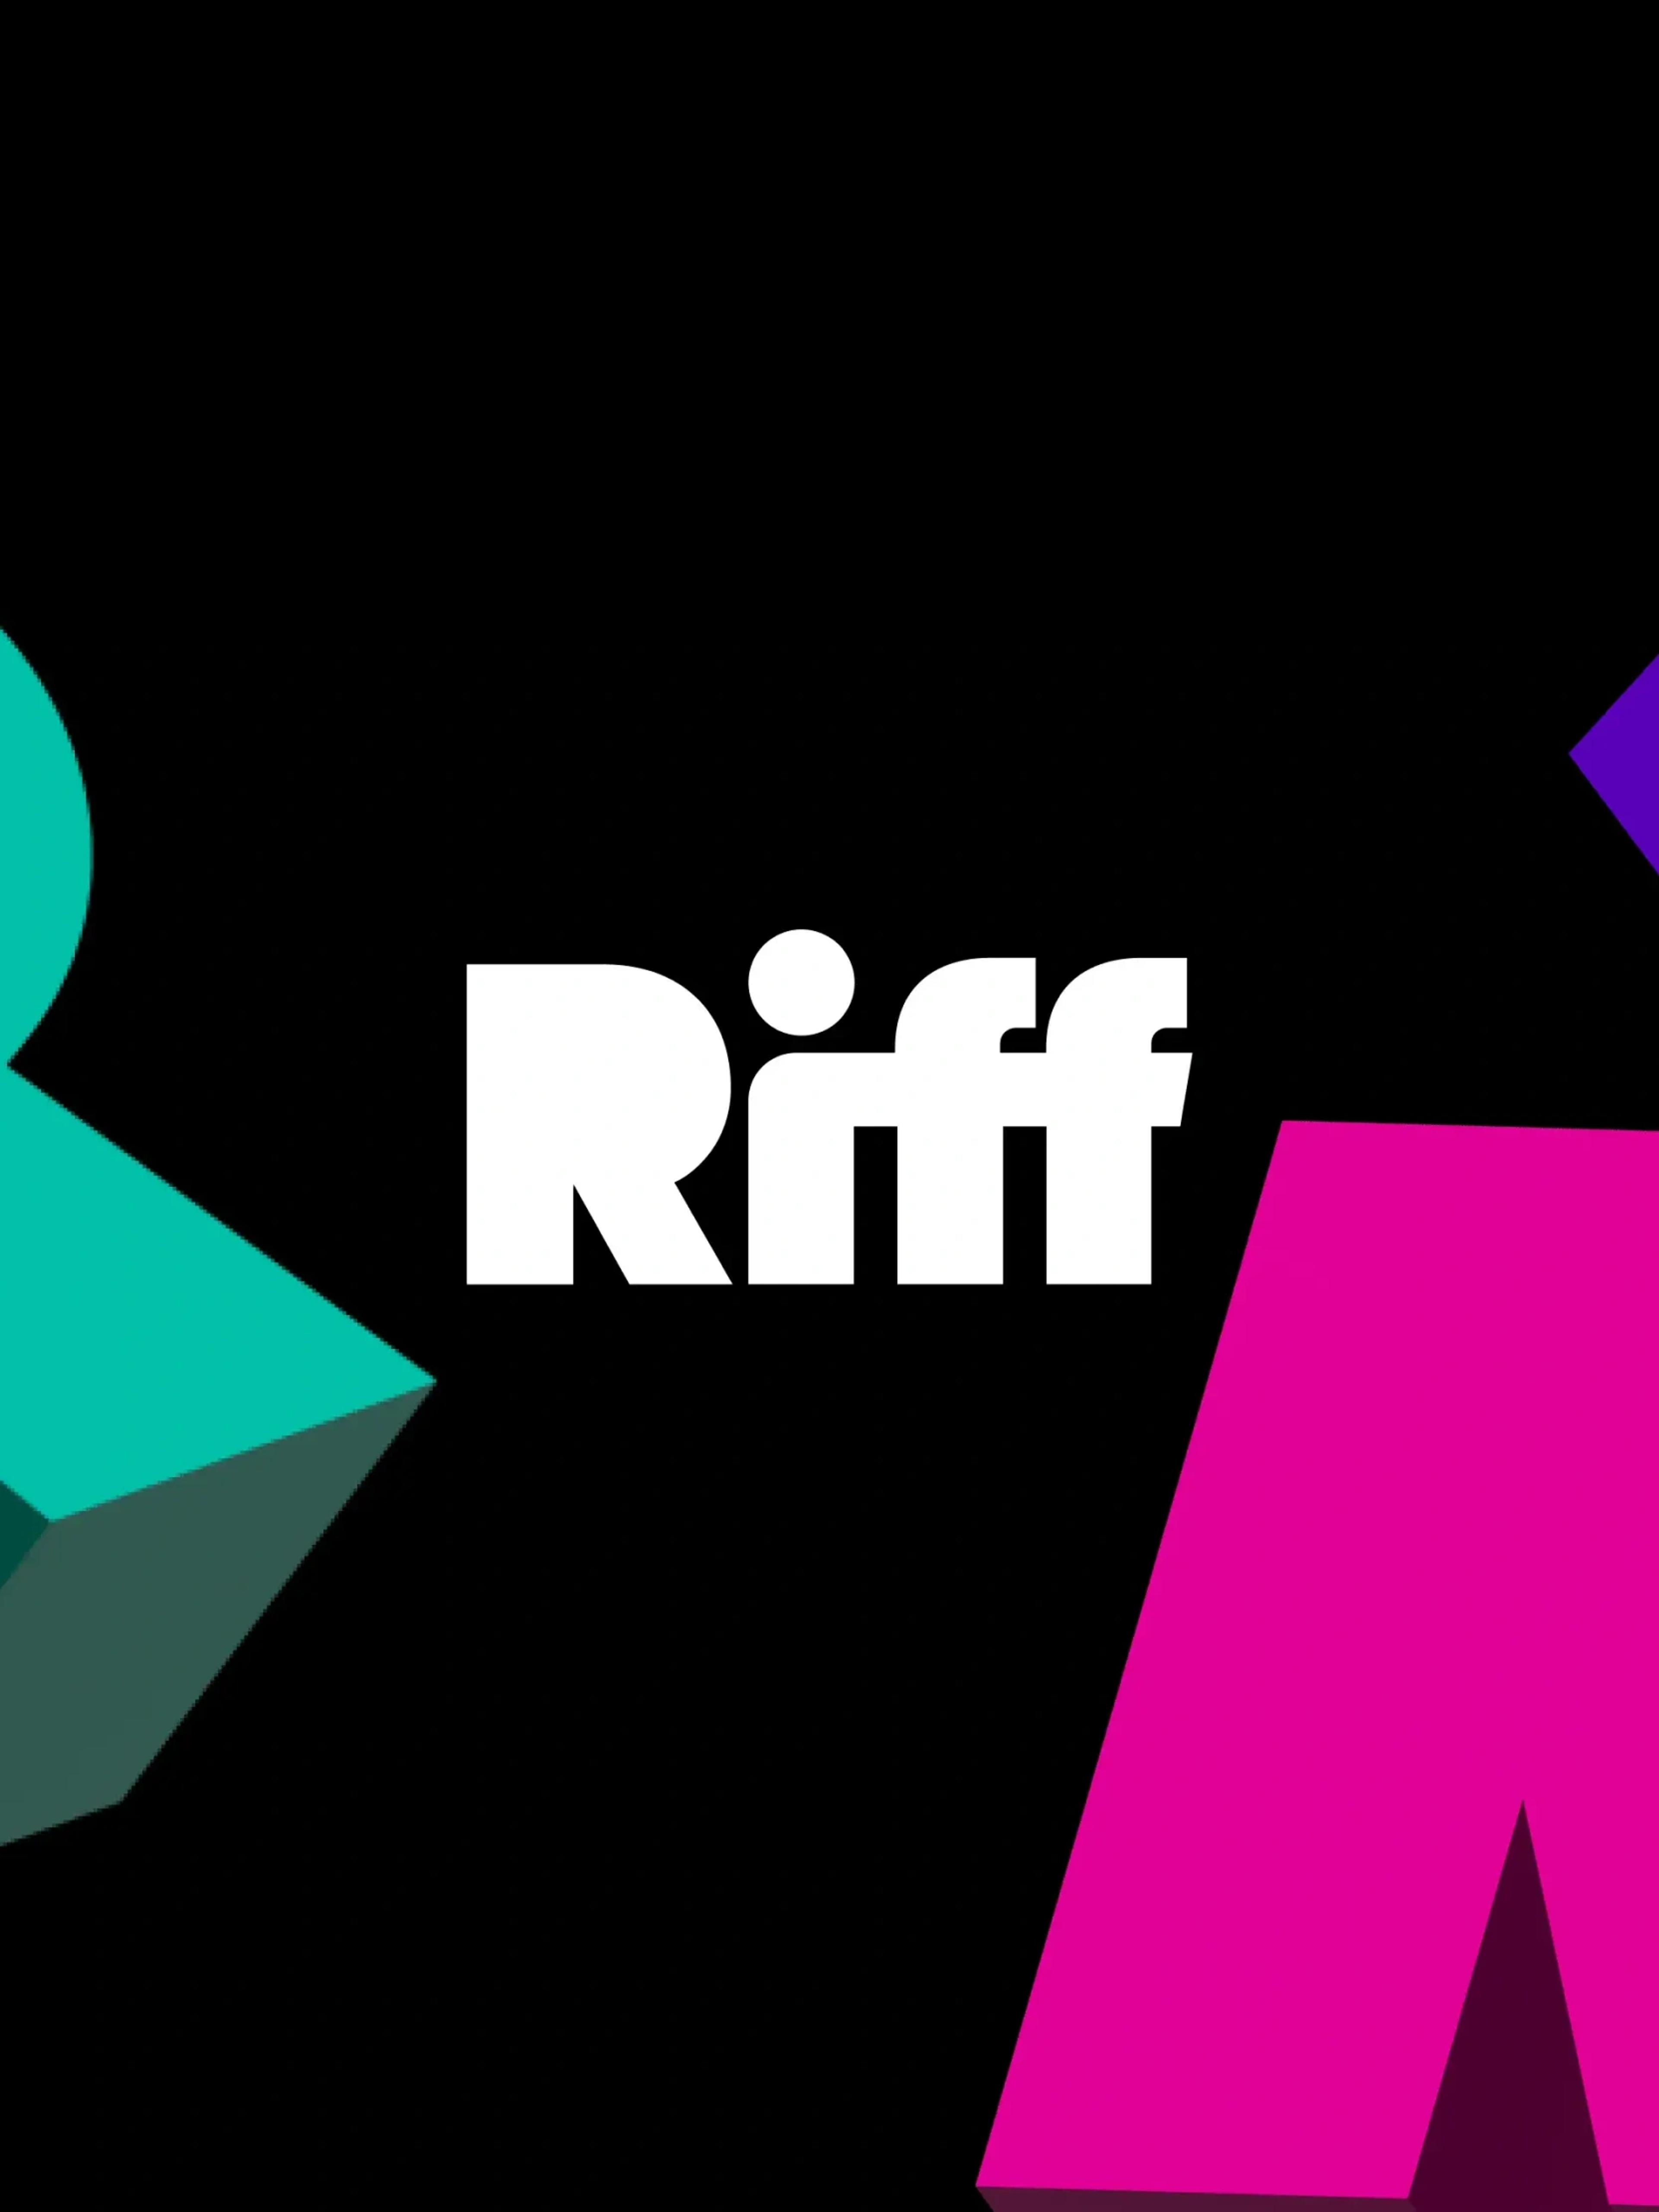 Riff logo with floating 3D symbols